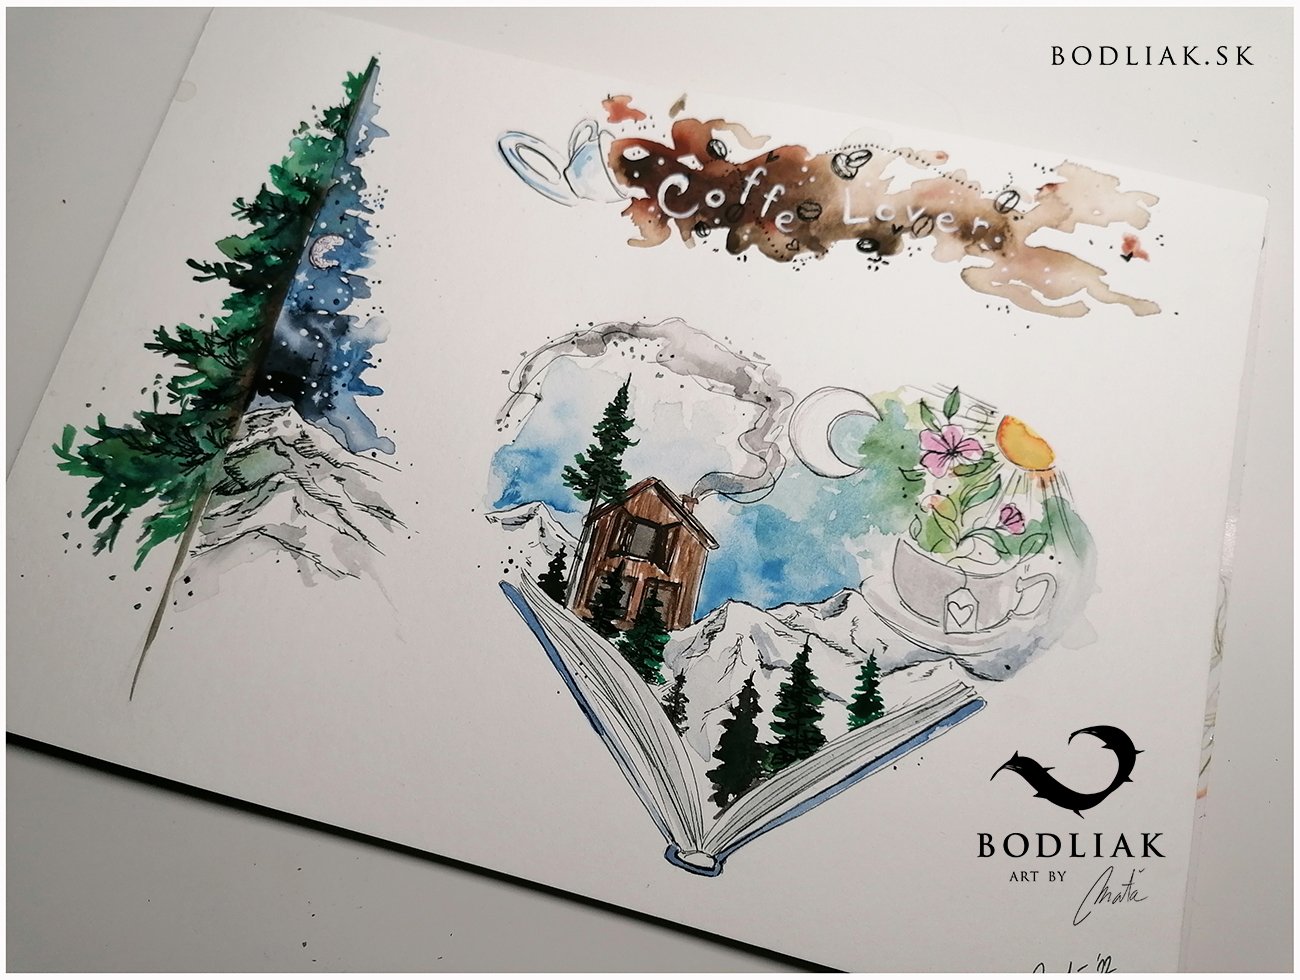  bodliak-bodliaktattoo-volny-motiv-tetovanie-tattoo-colourtattoo-book-nature-design-mata-booklover-heart-coffe-coffetattoo-tree-mountain-night 